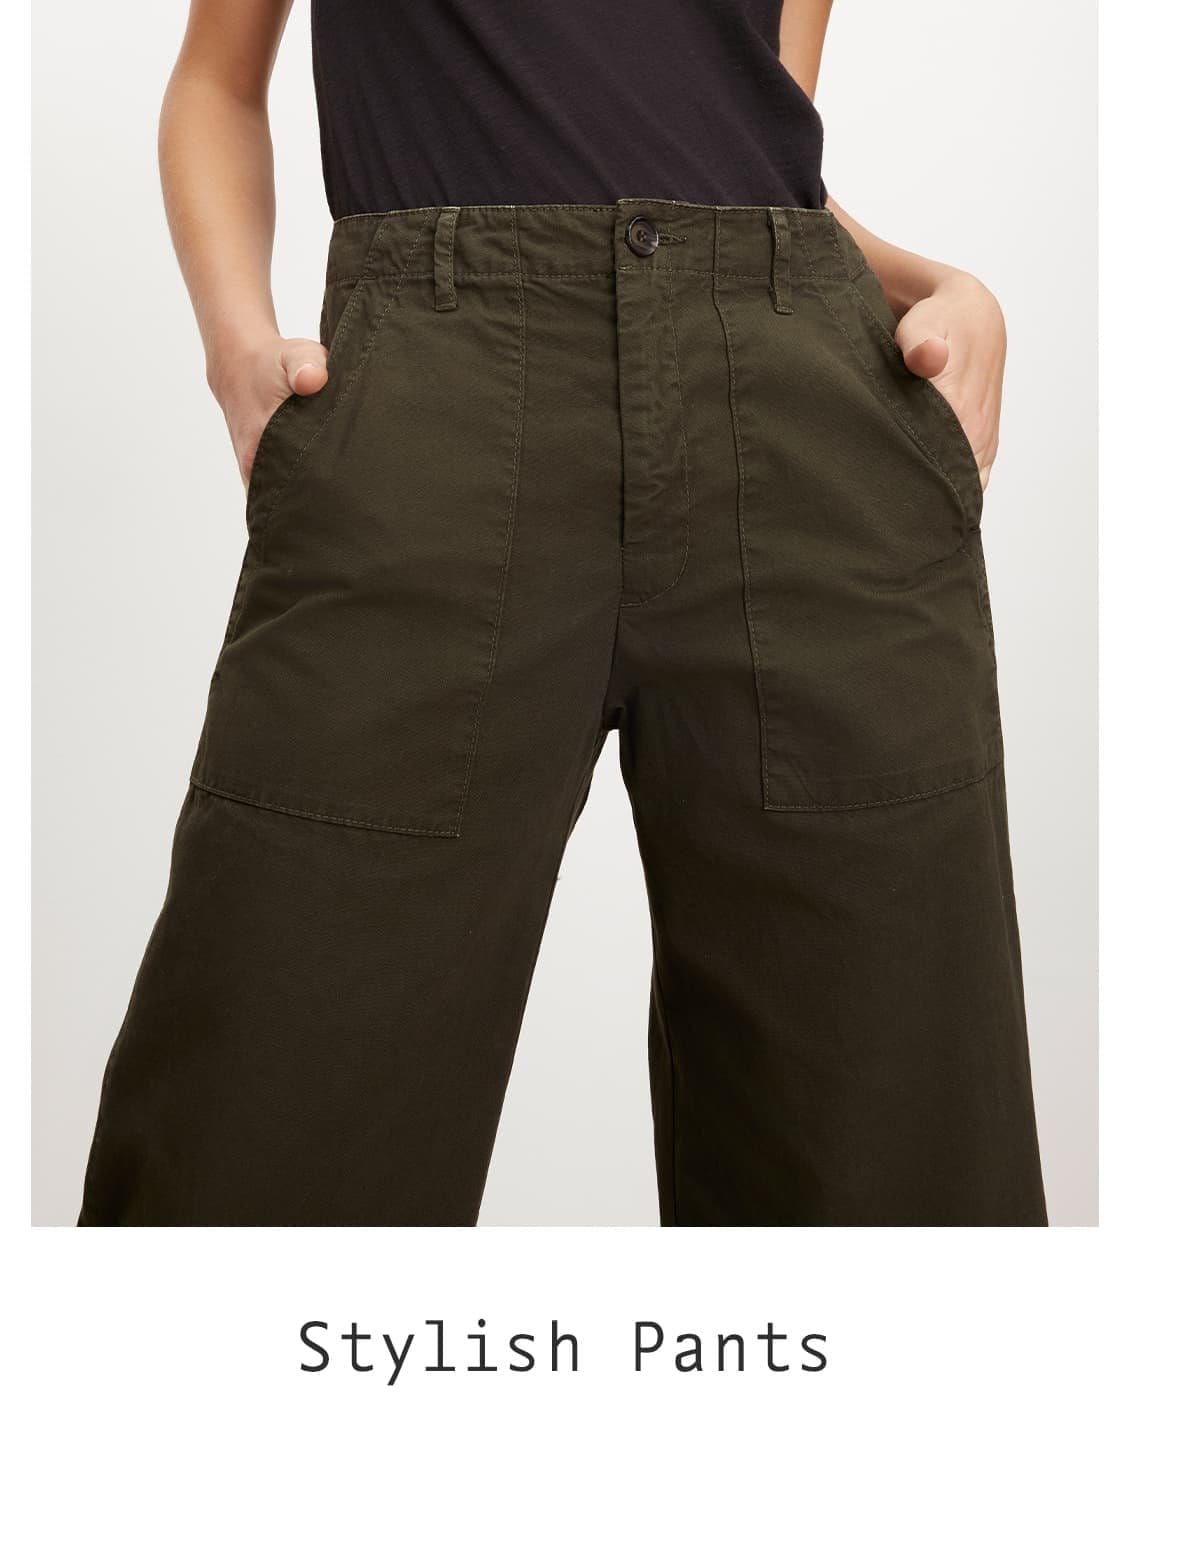 Stylish Pants